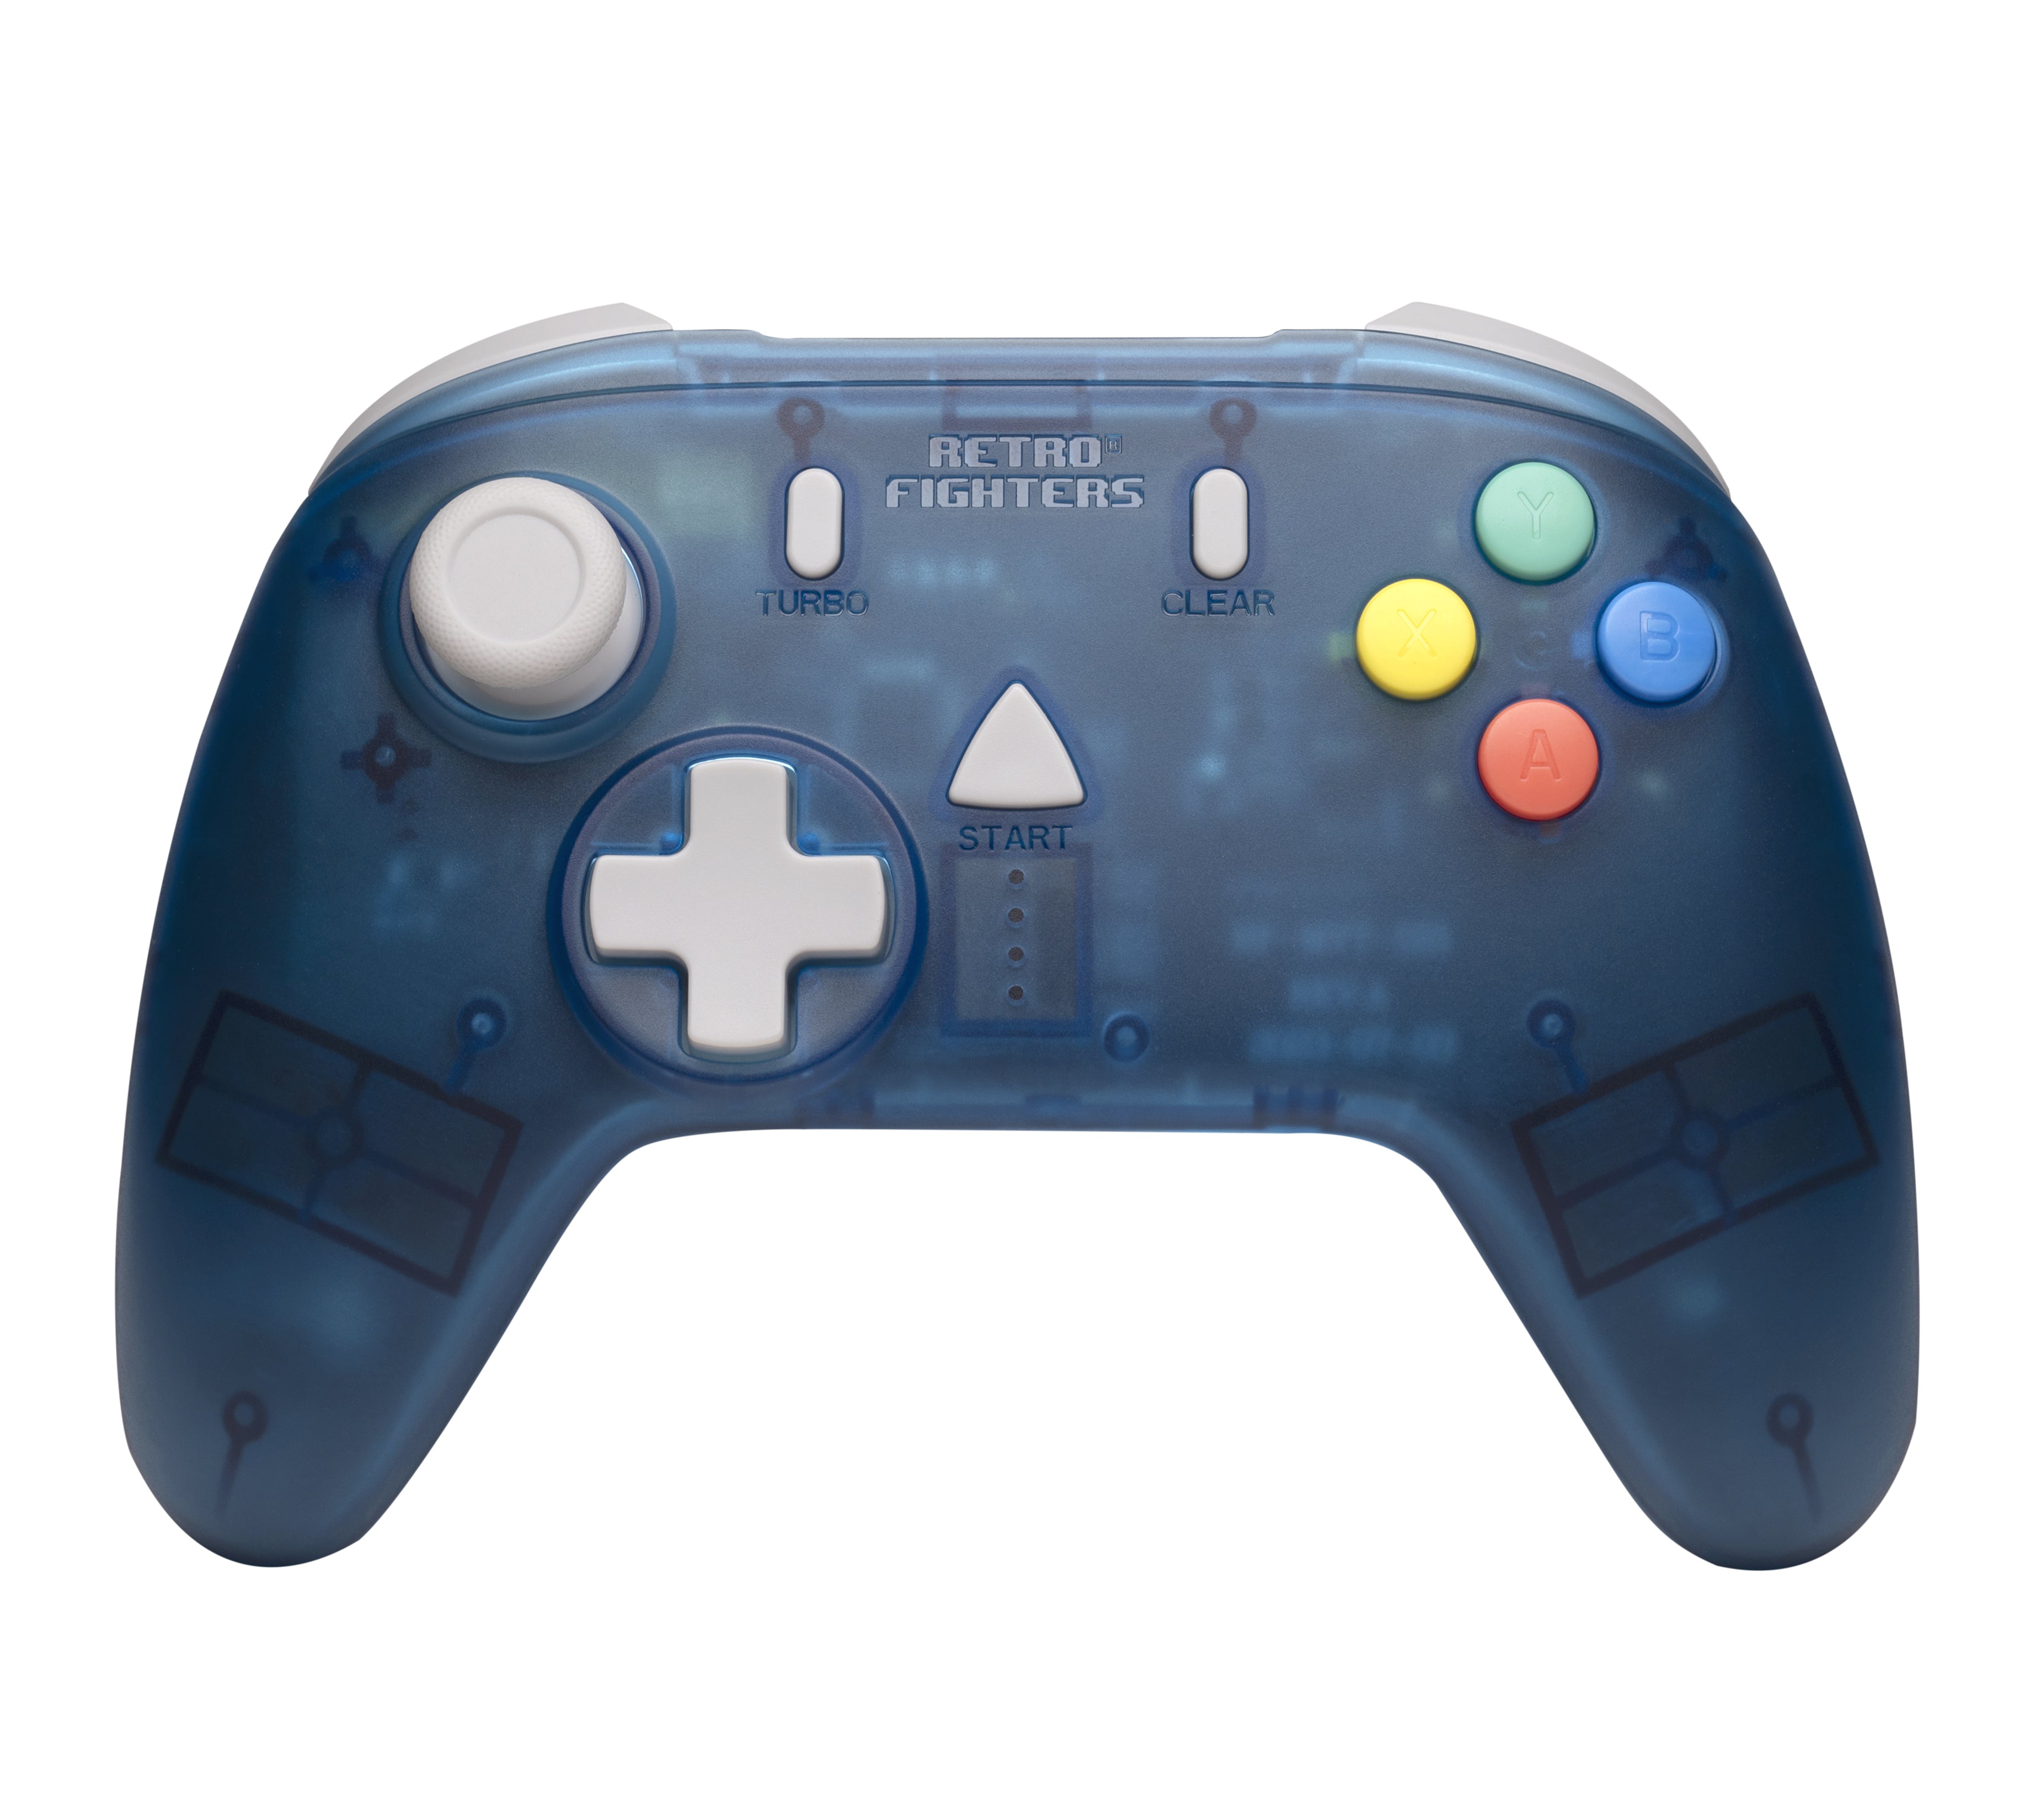 StrikerDC wireless controller for Sega Dreamcast- Blue | Retro 